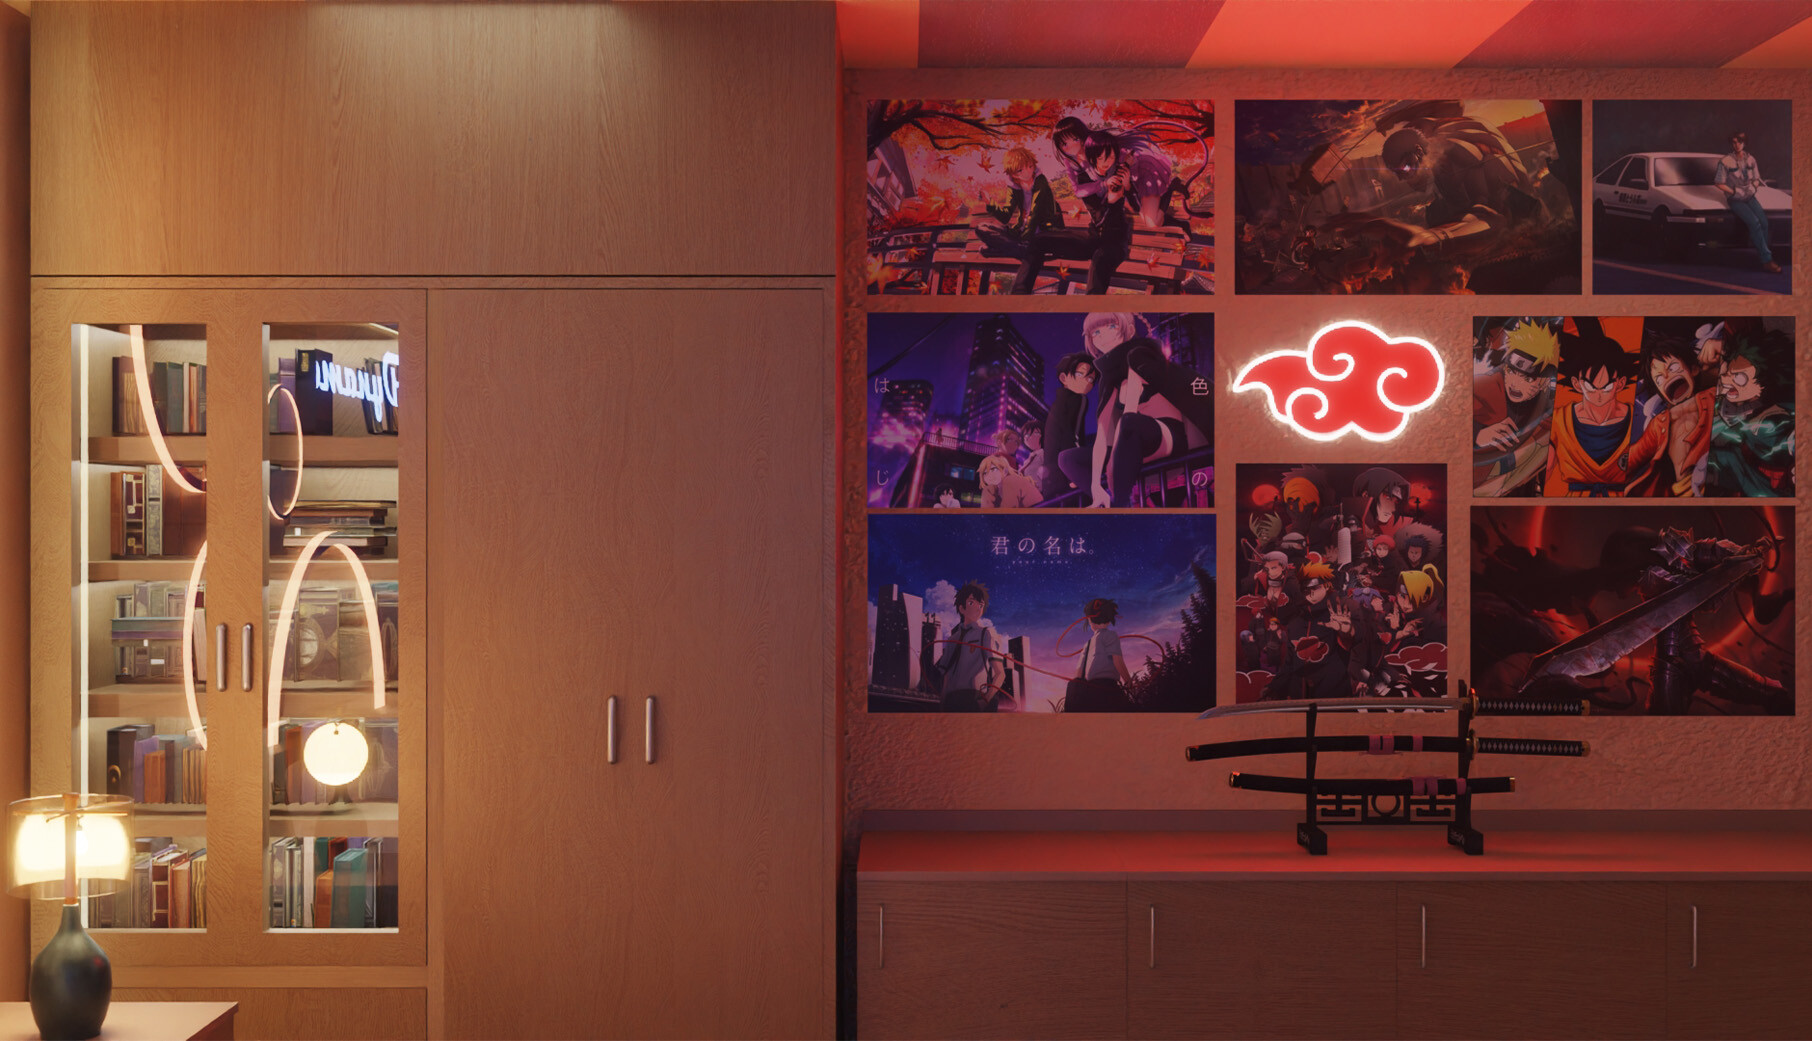 ArtStation - An otaku gaming room